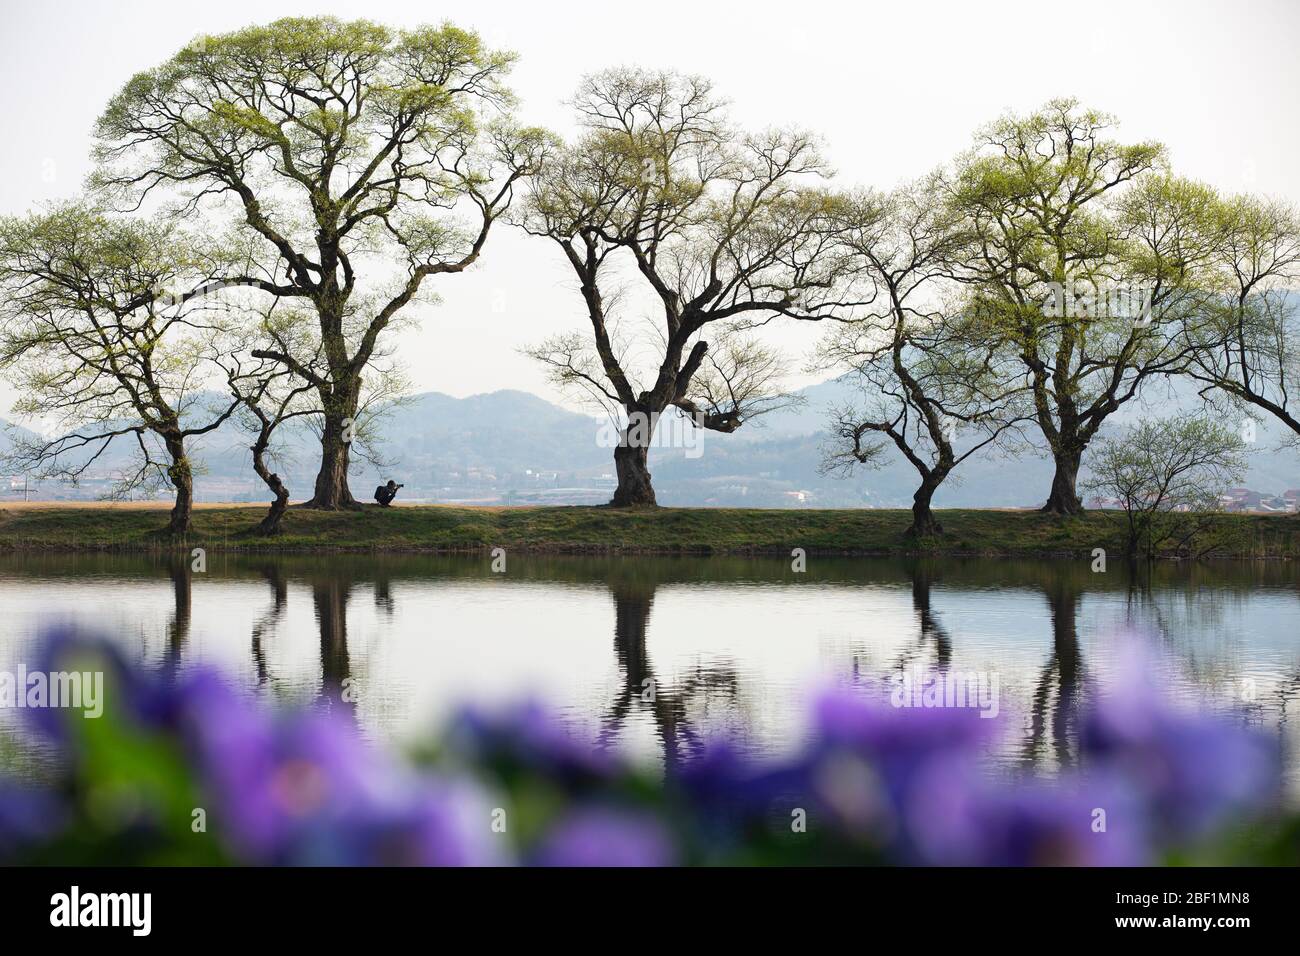 beautiful spring landscape with sprouting willow trees on the lakeside, Bangokji, Gyeongsan-si, Korea Stock Photo